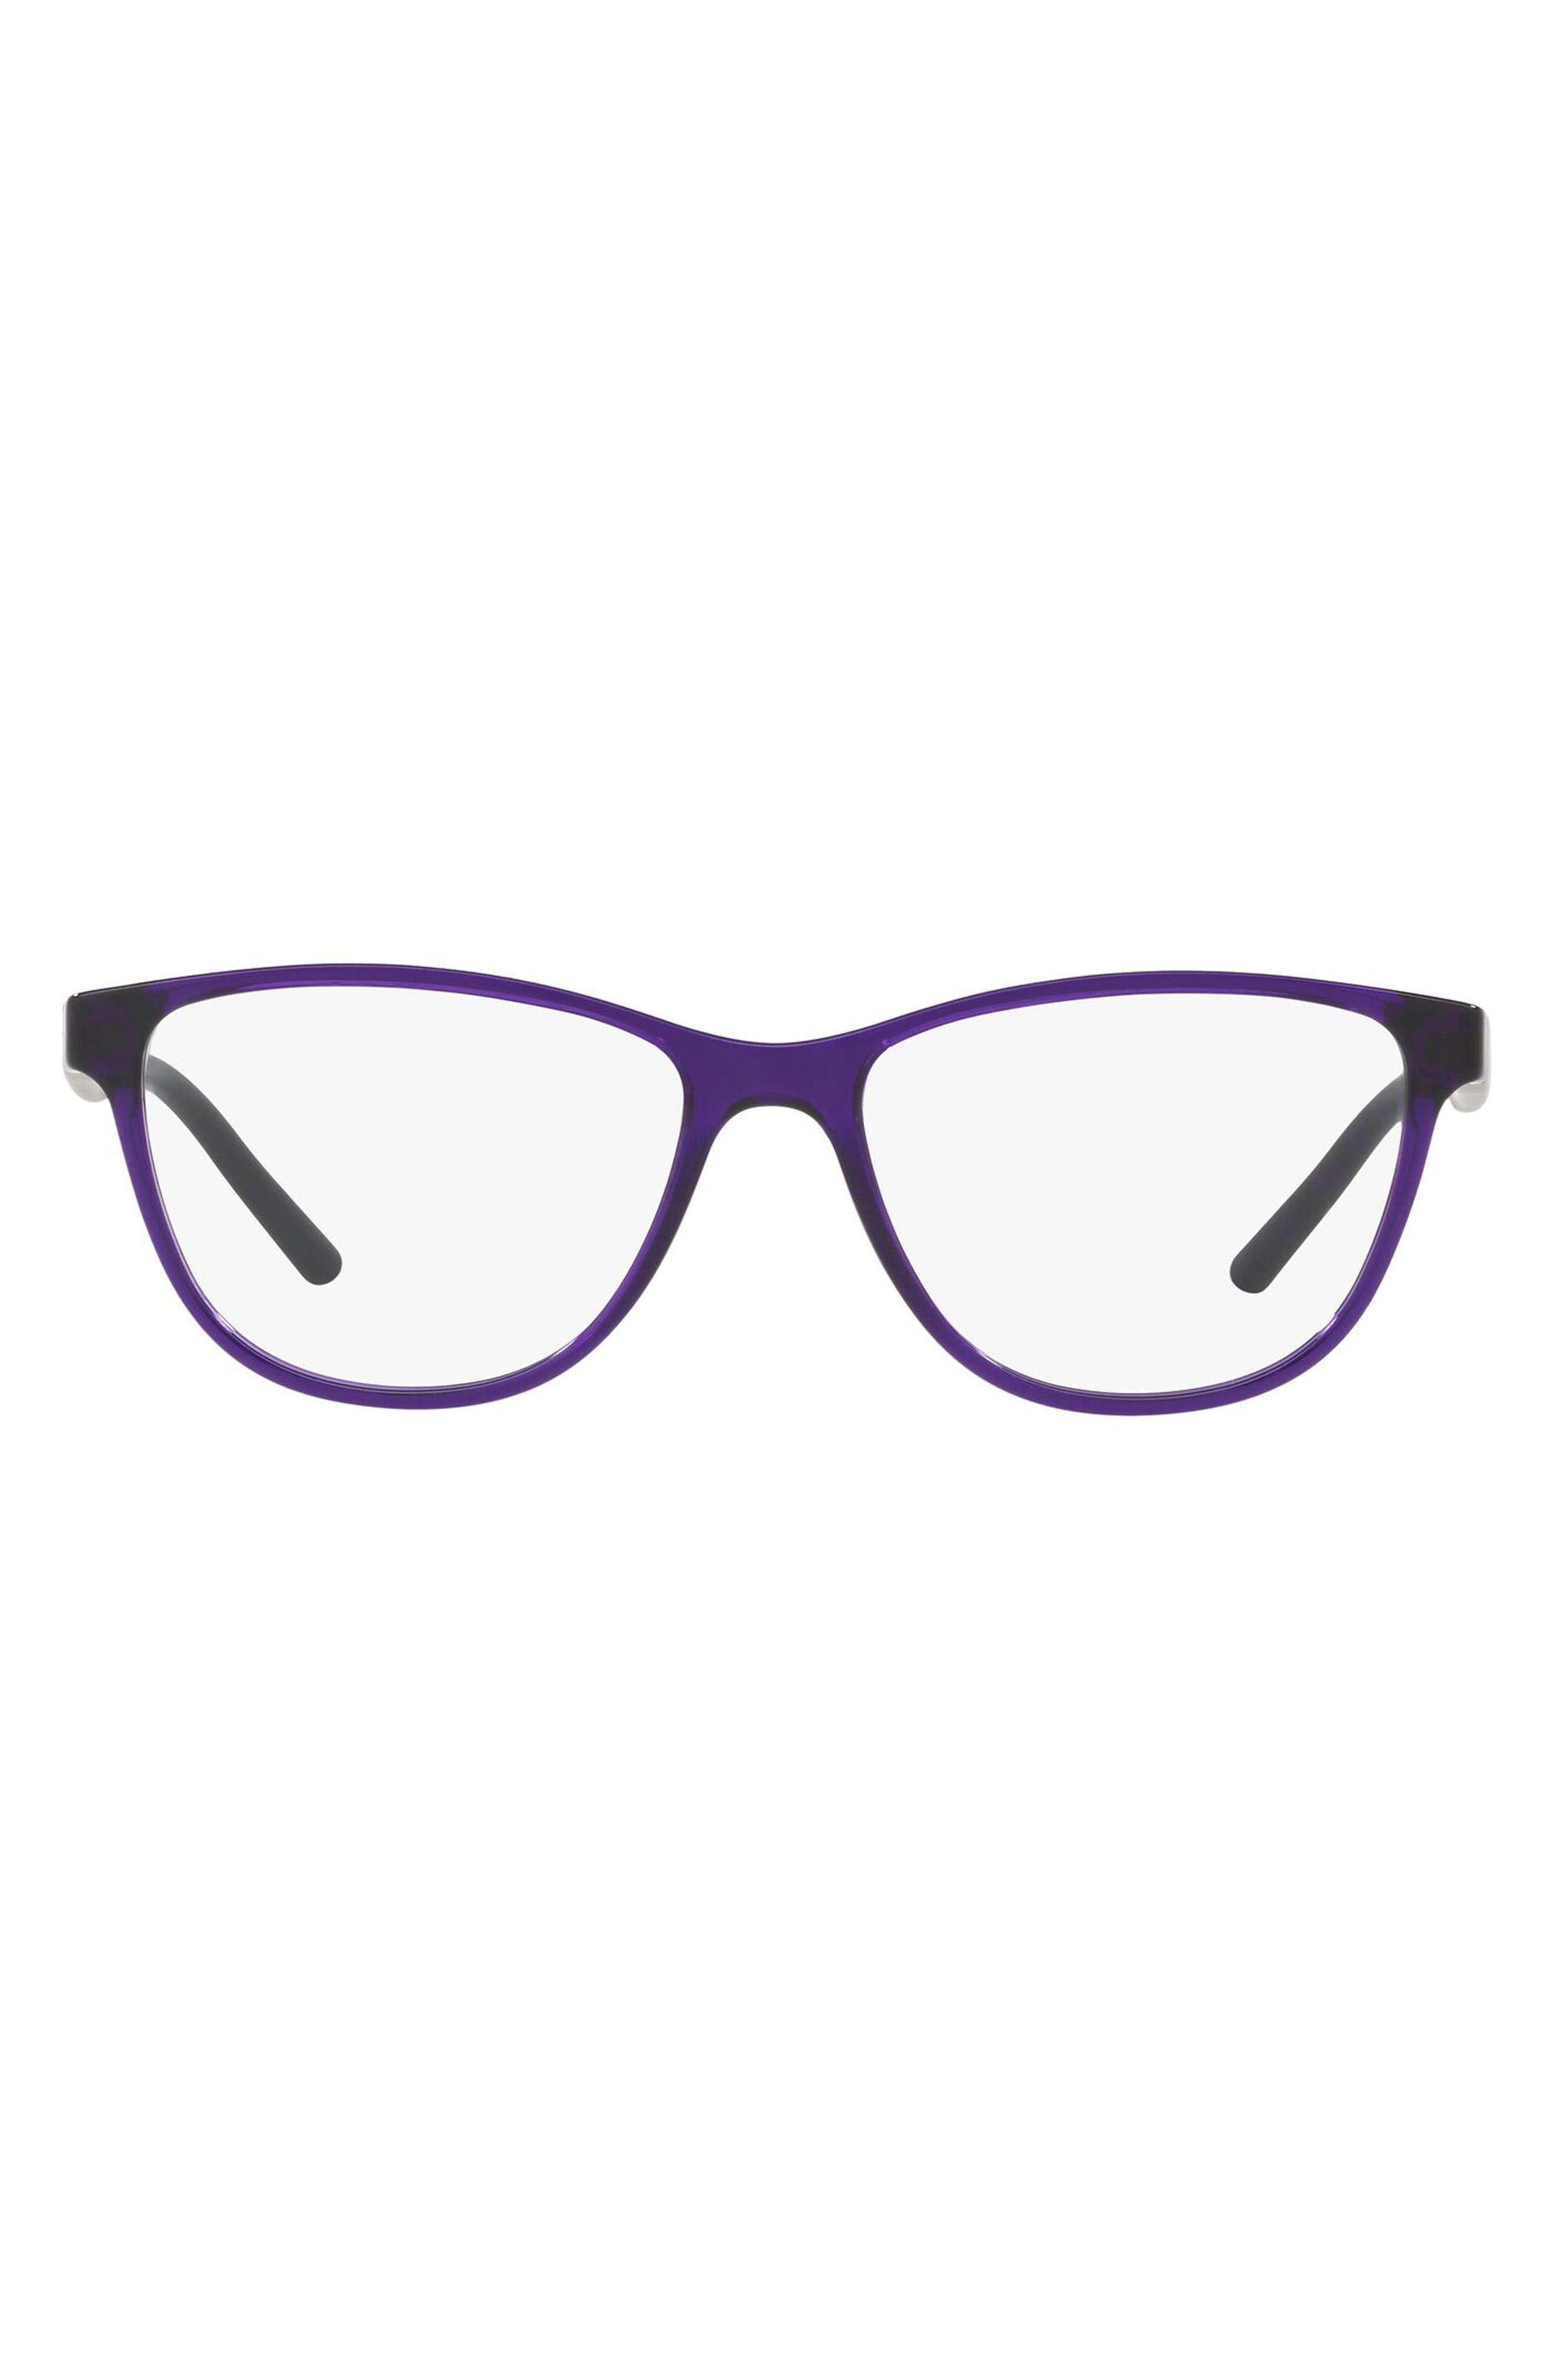 EAN 8053672798319 product image for Men's Ax Armani Exchange 53mm Reading Glasses - Violet | upcitemdb.com